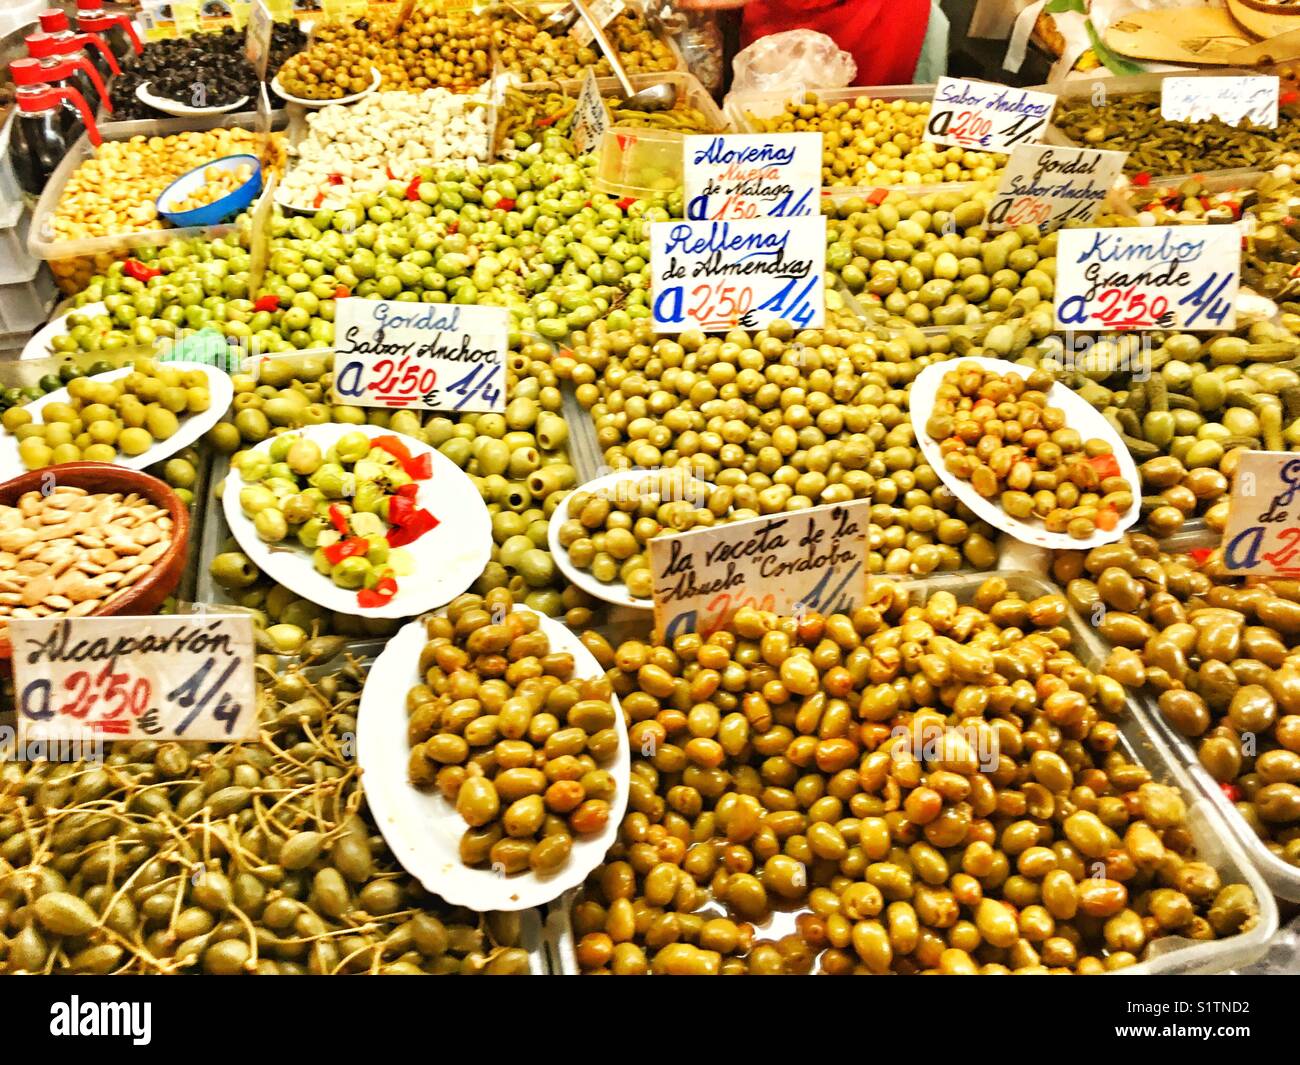 Malaga, Mercado de Atazaranas, offering olives Stock Photo - Alamy